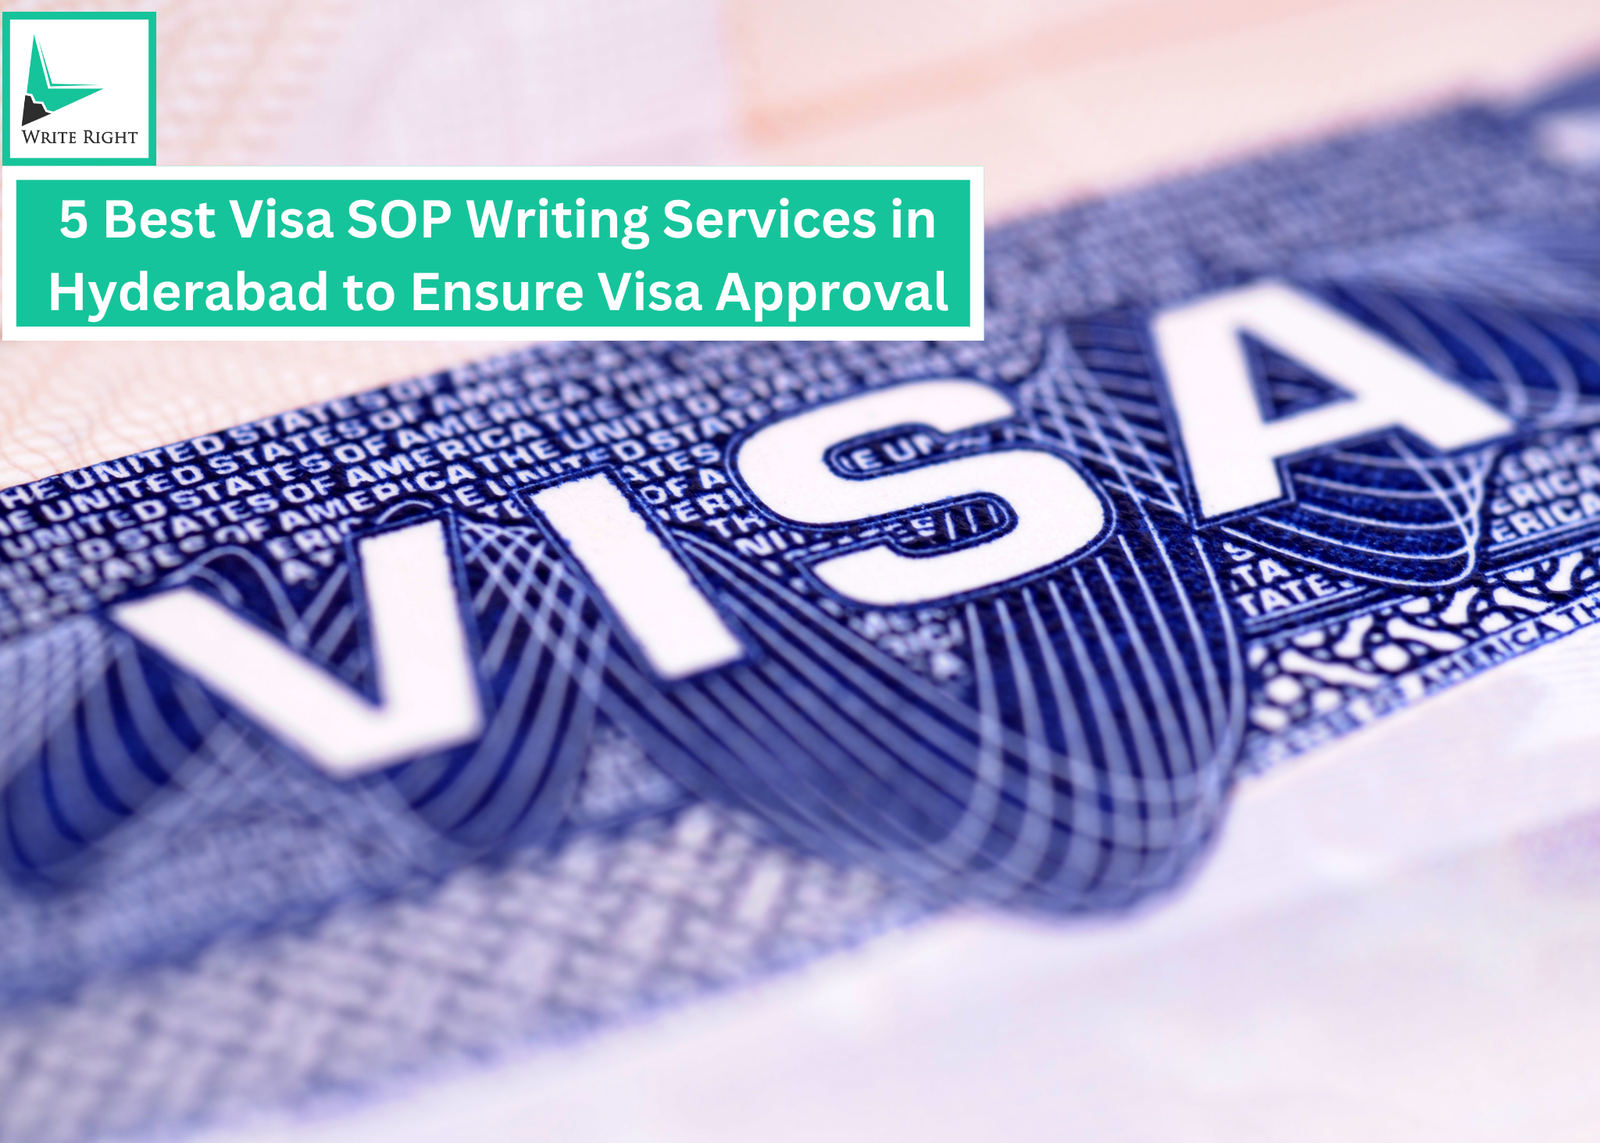 5 Best Visa SOP Writing Services in Hyderabad to Ensure Visa Approval